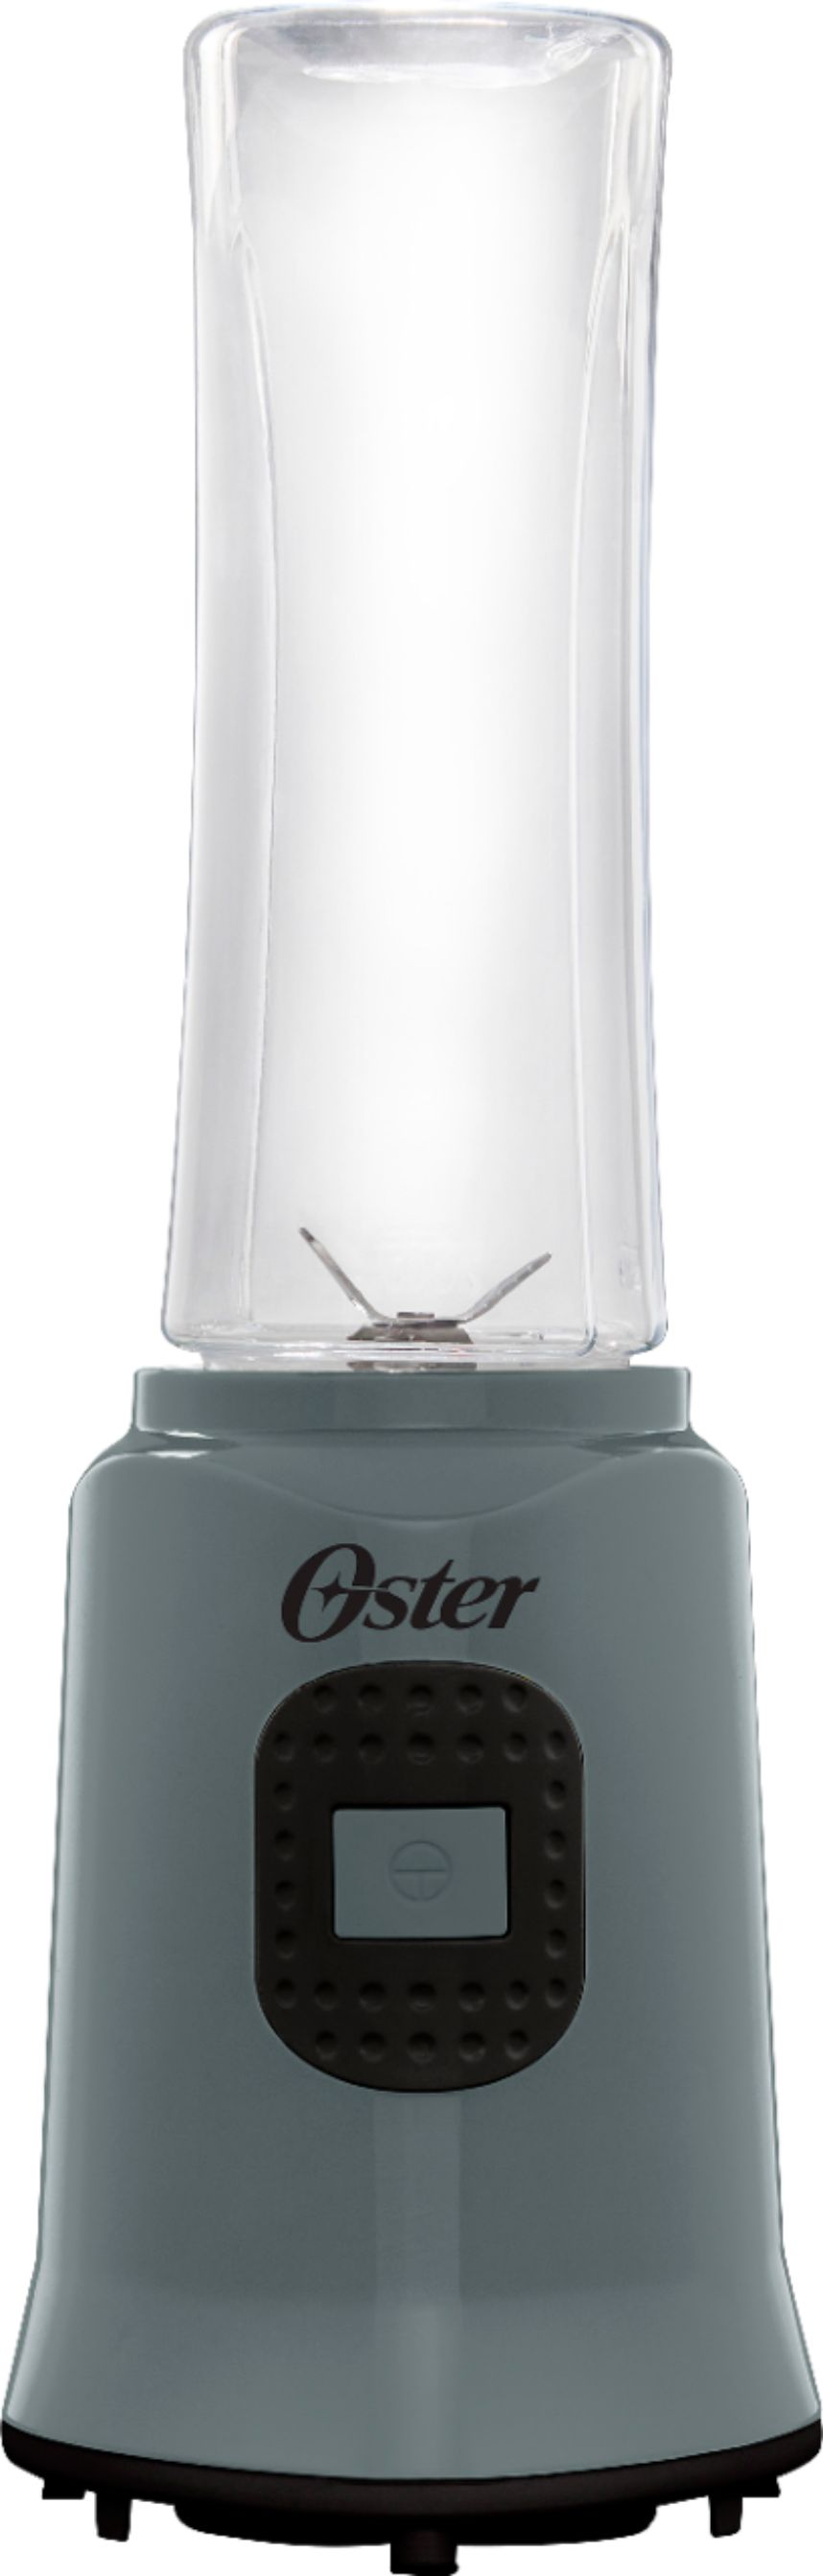 Oster My Blend Pro BLSTPB2-BGR-000 Blender Review - Consumer Reports